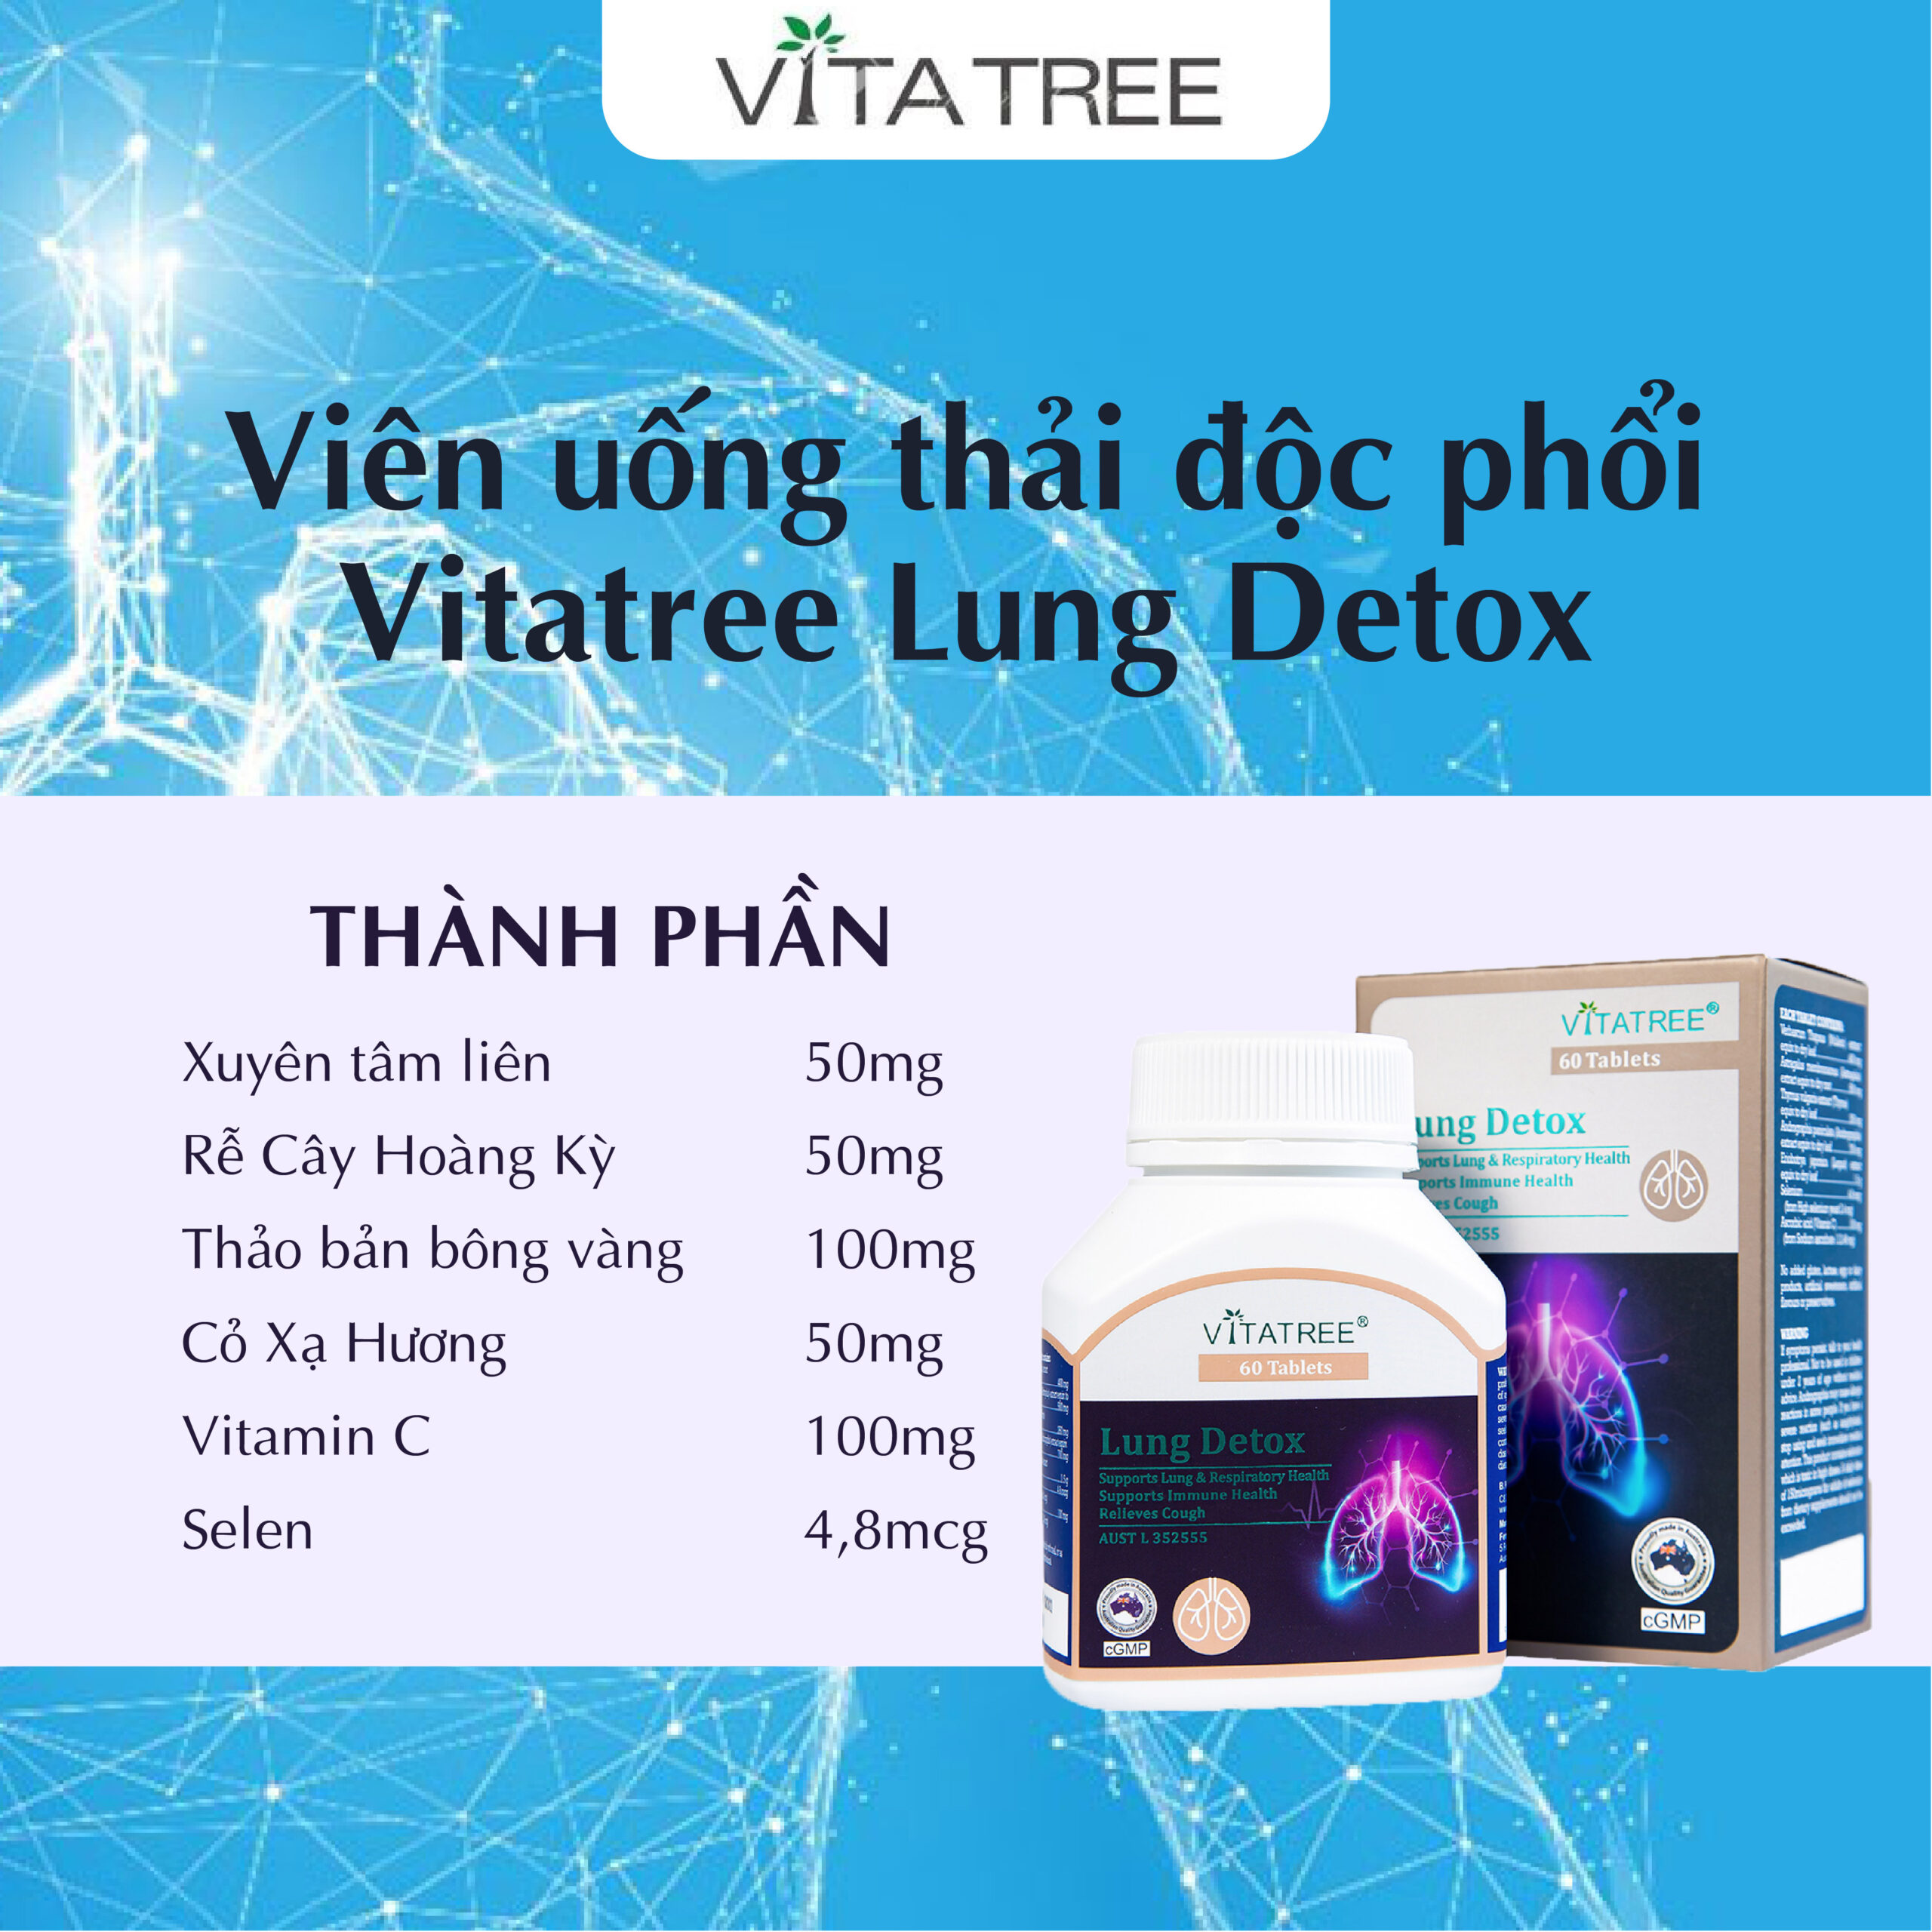 Thai doc phoi Vitatree Lung Detox1 scaled